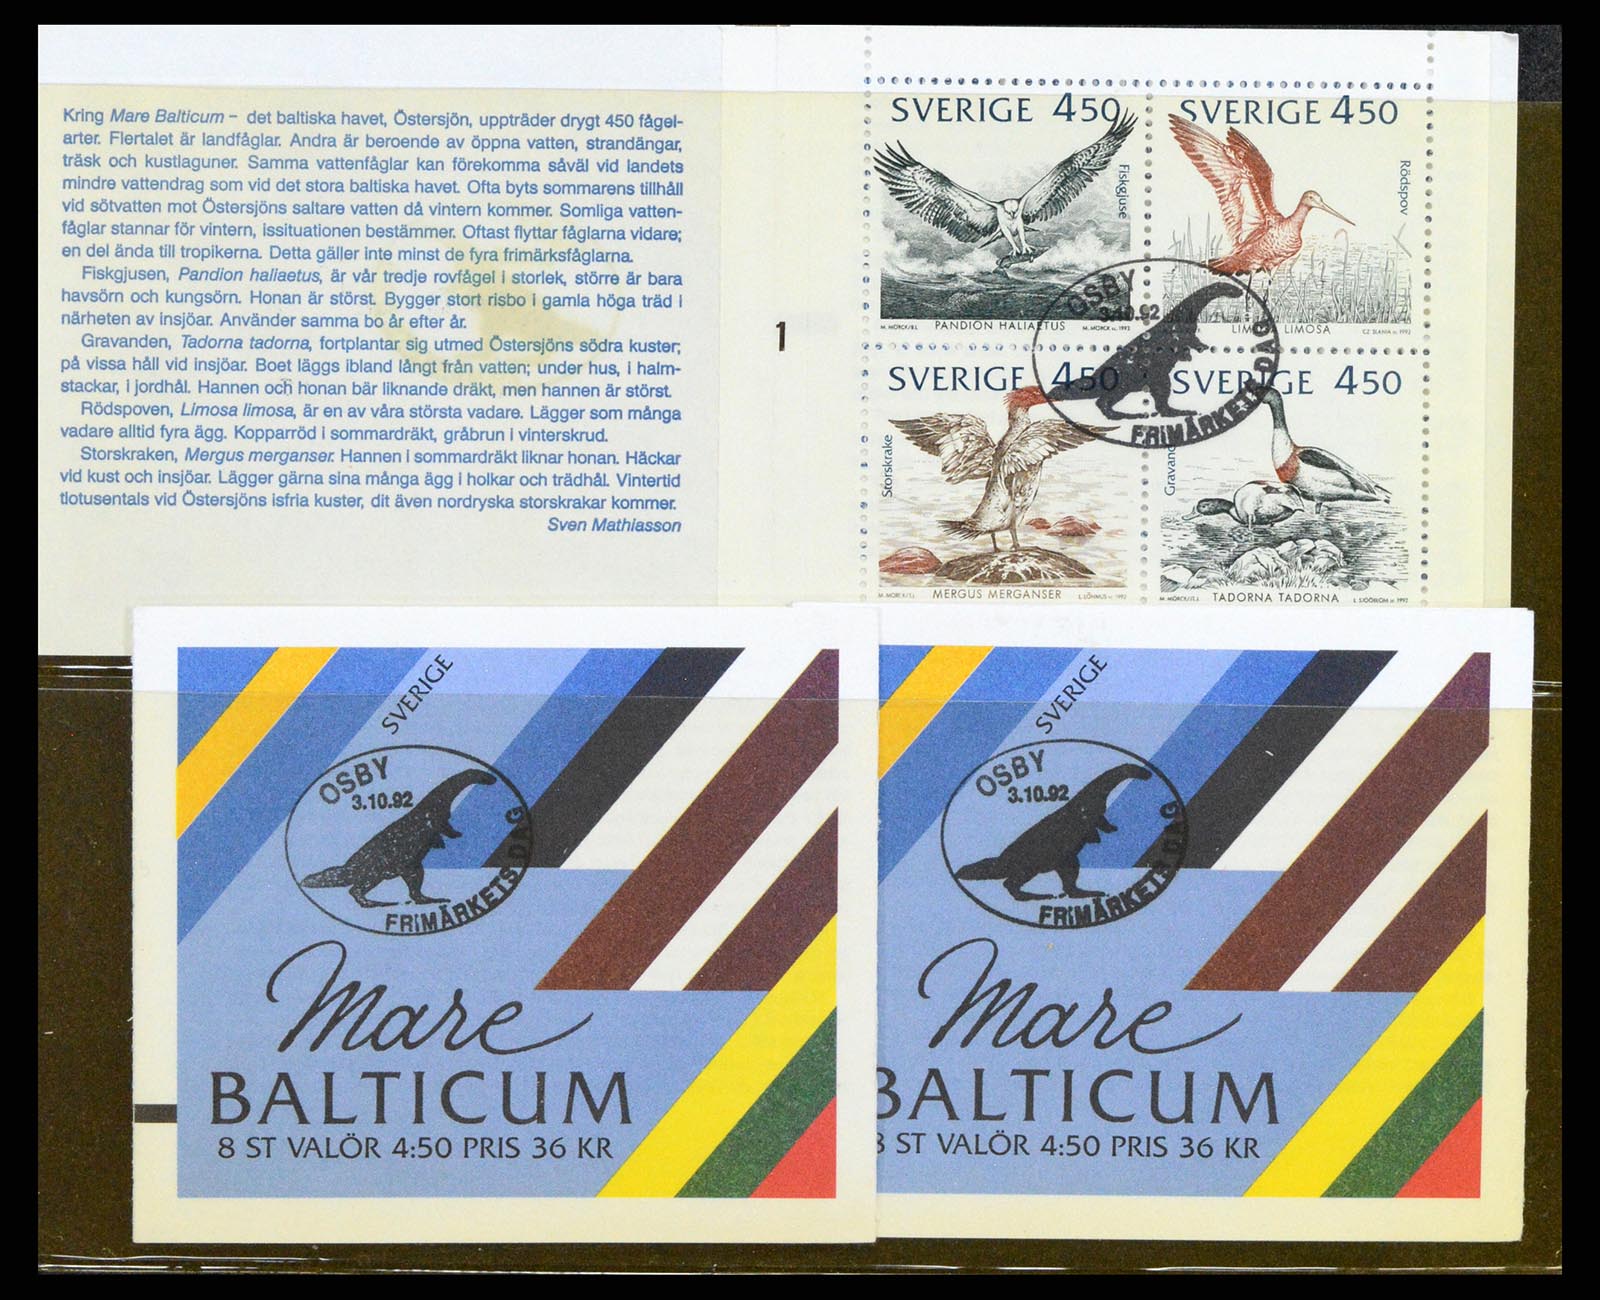 37341 007 - Stamp collection 37341 Sweden stamp booklets.